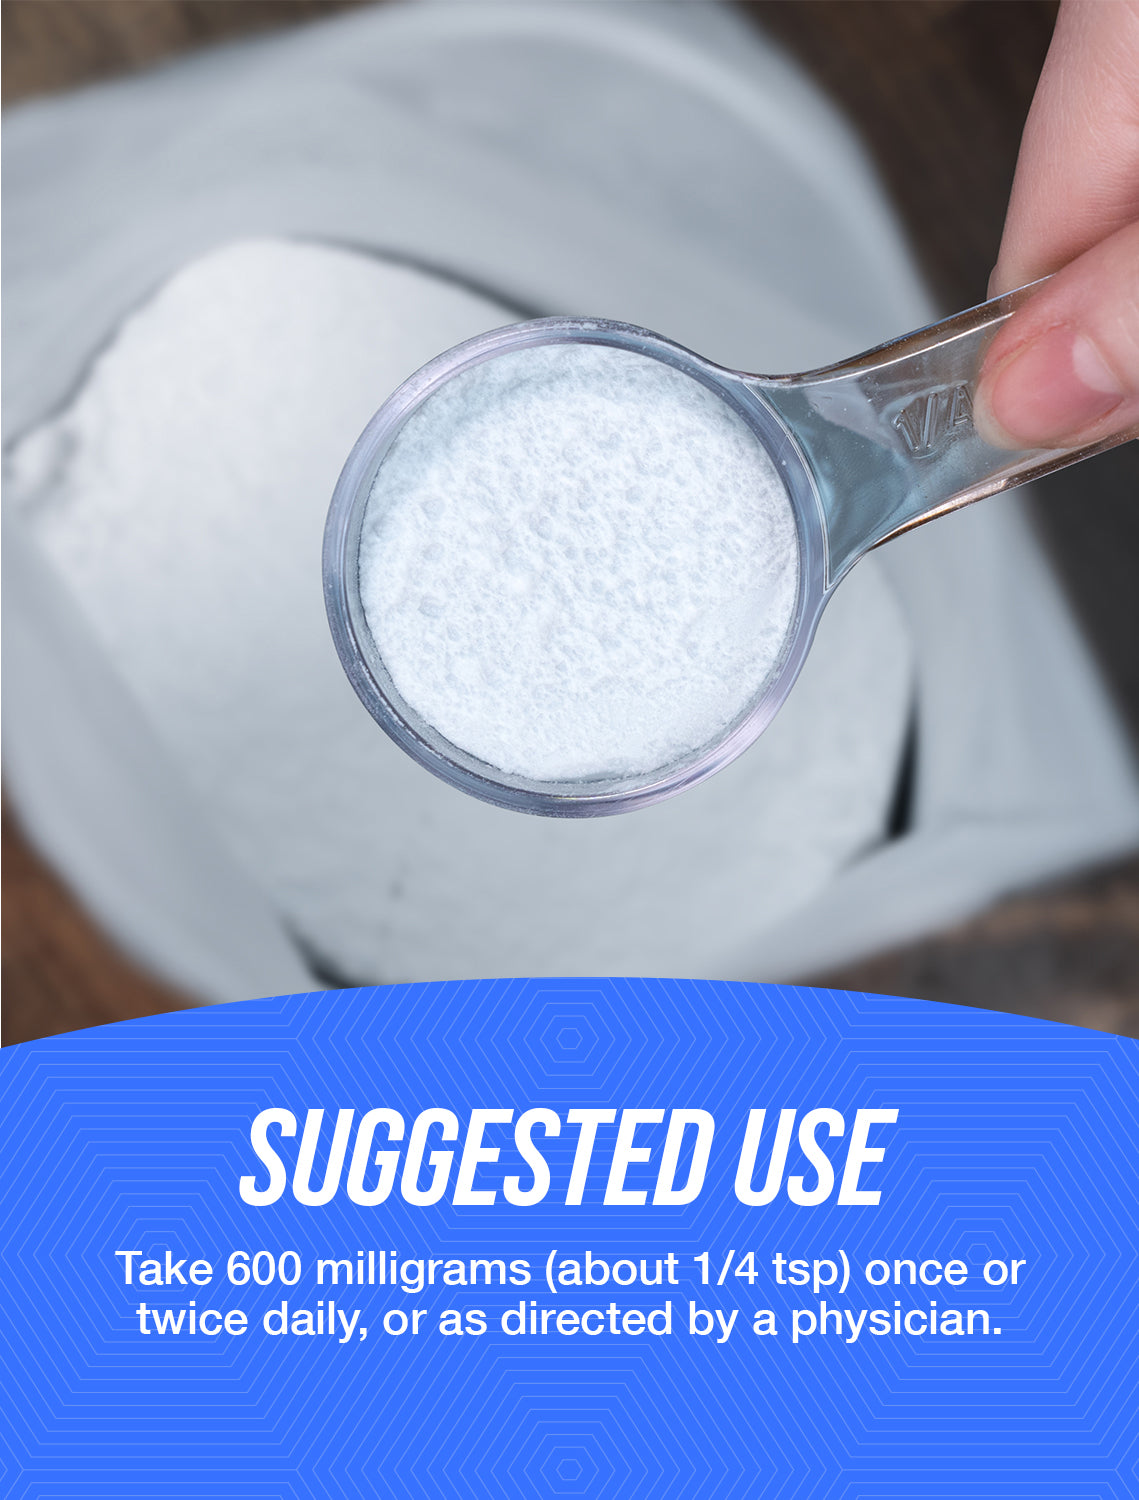 Calcium gluconate powder suggested use image